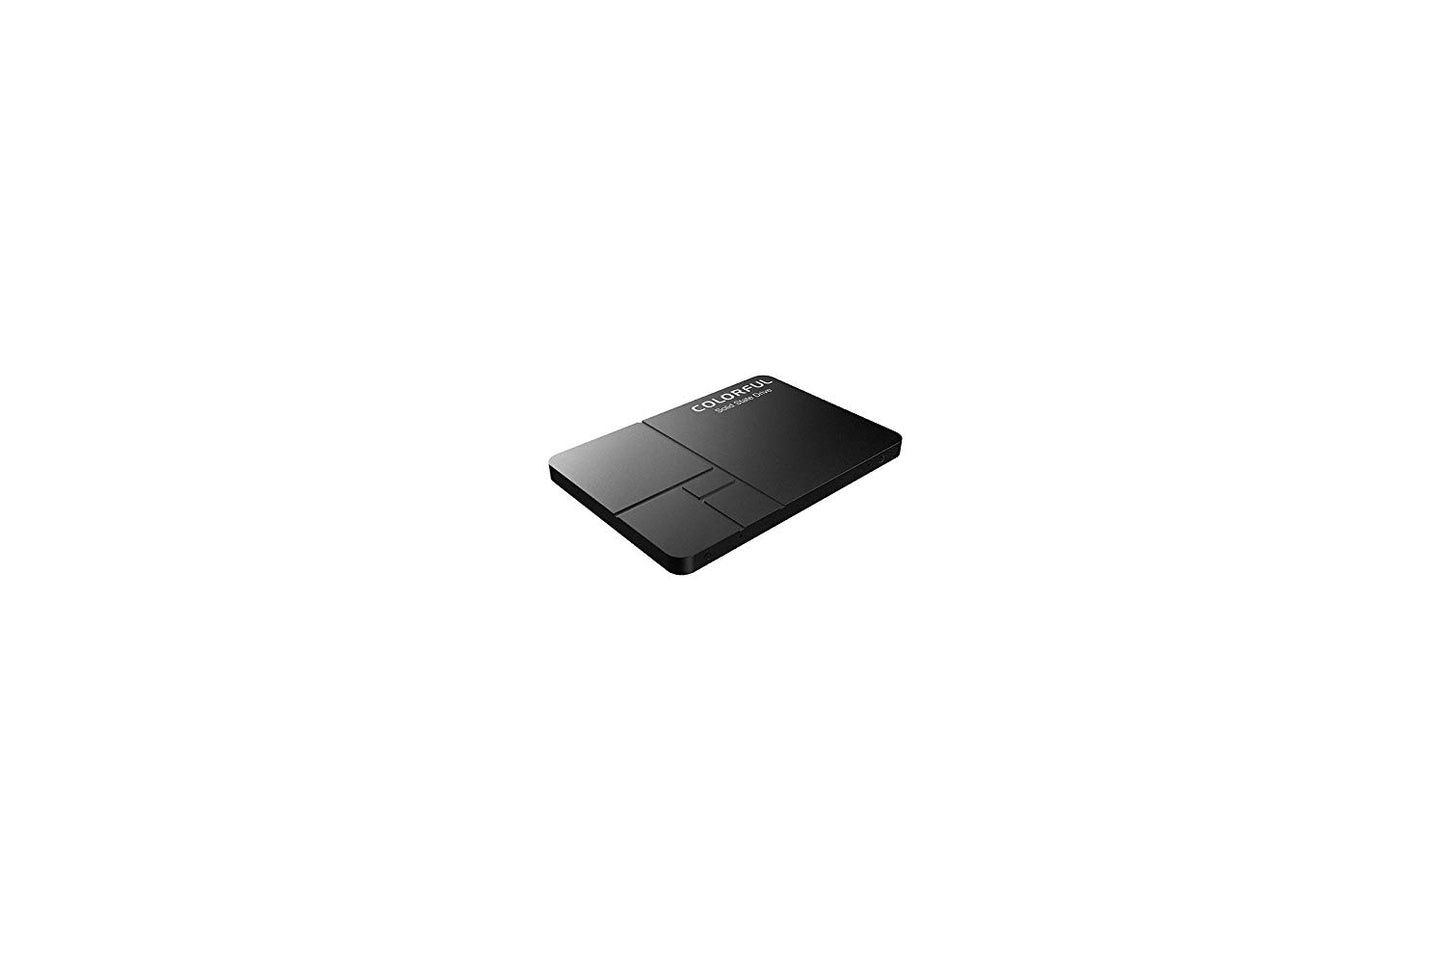 Colorful SL500 1 TB 2.5" SATA 3 3D Nand Internal Solid State Drive PC Laptop Classic Black,DRAM Cache